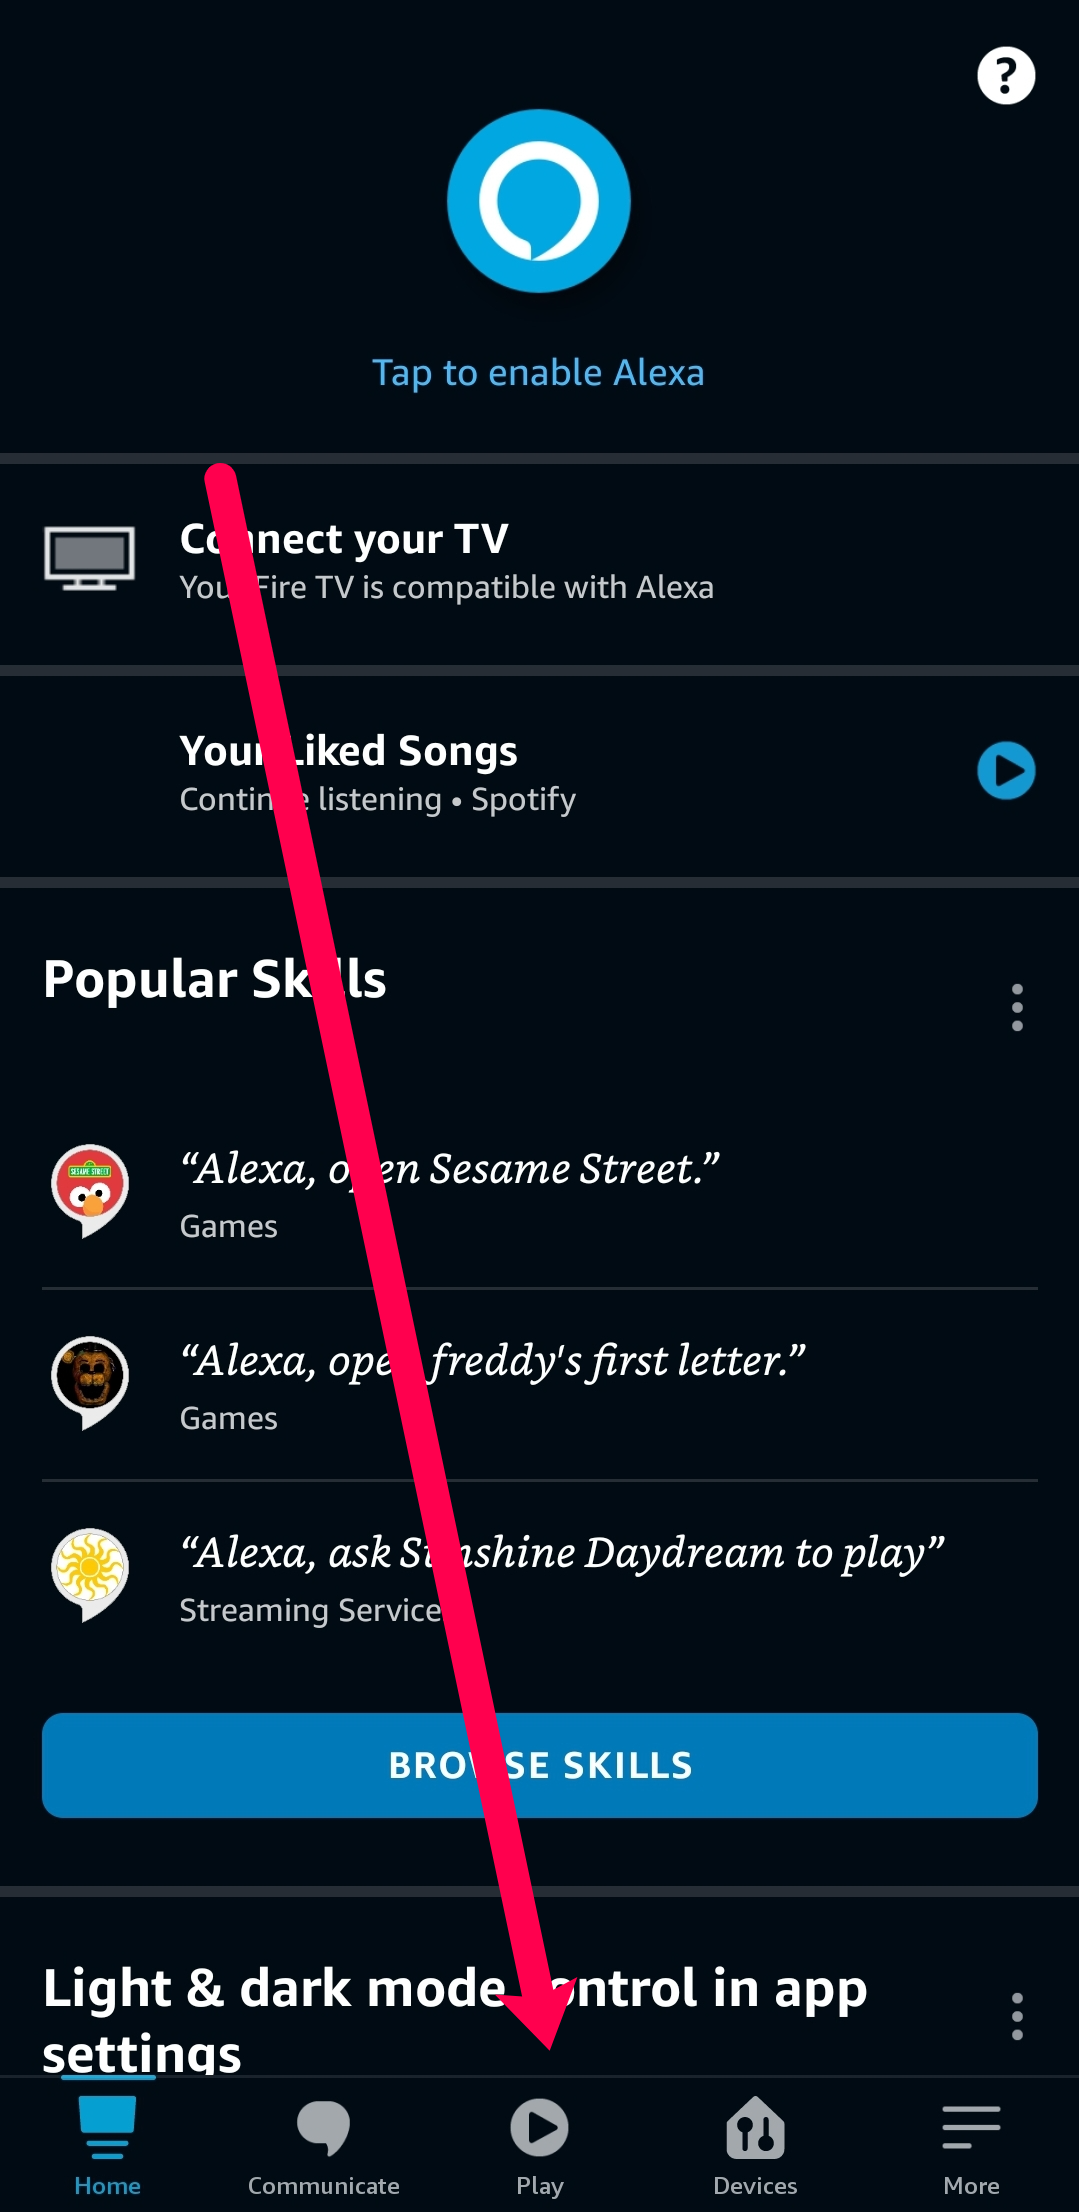 Je Spotify zdarma na Alexa?